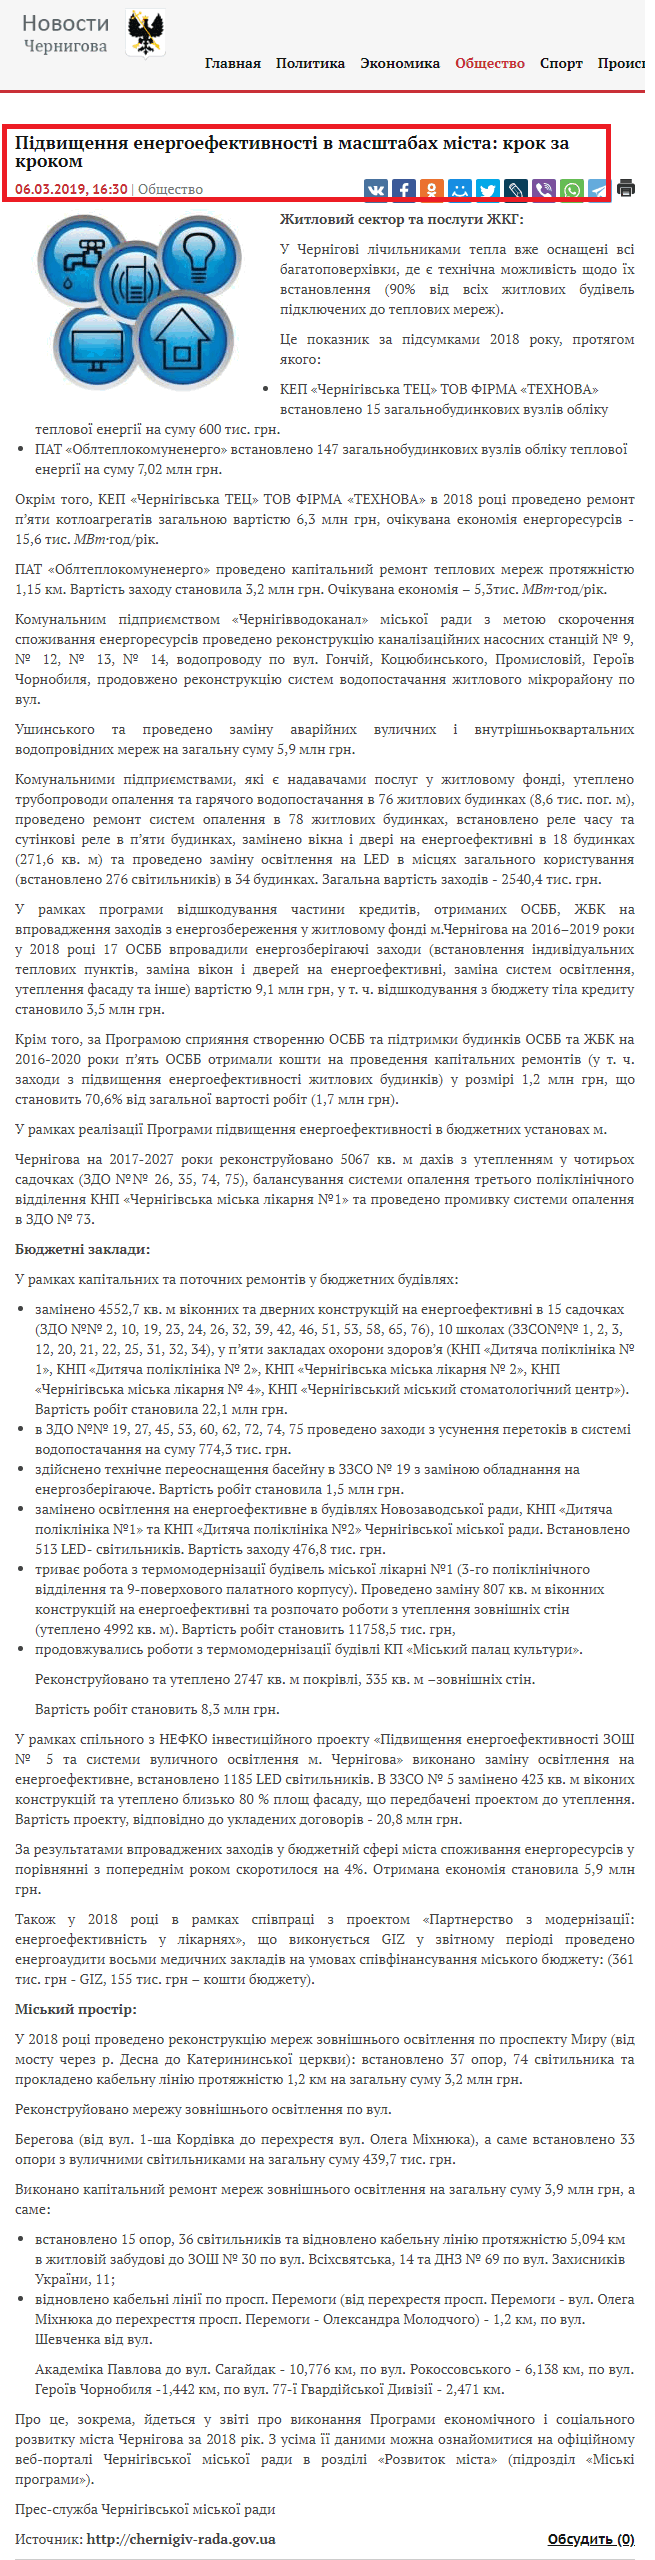 http://topnews.cn.ua/society/2019/03/06/116718.html